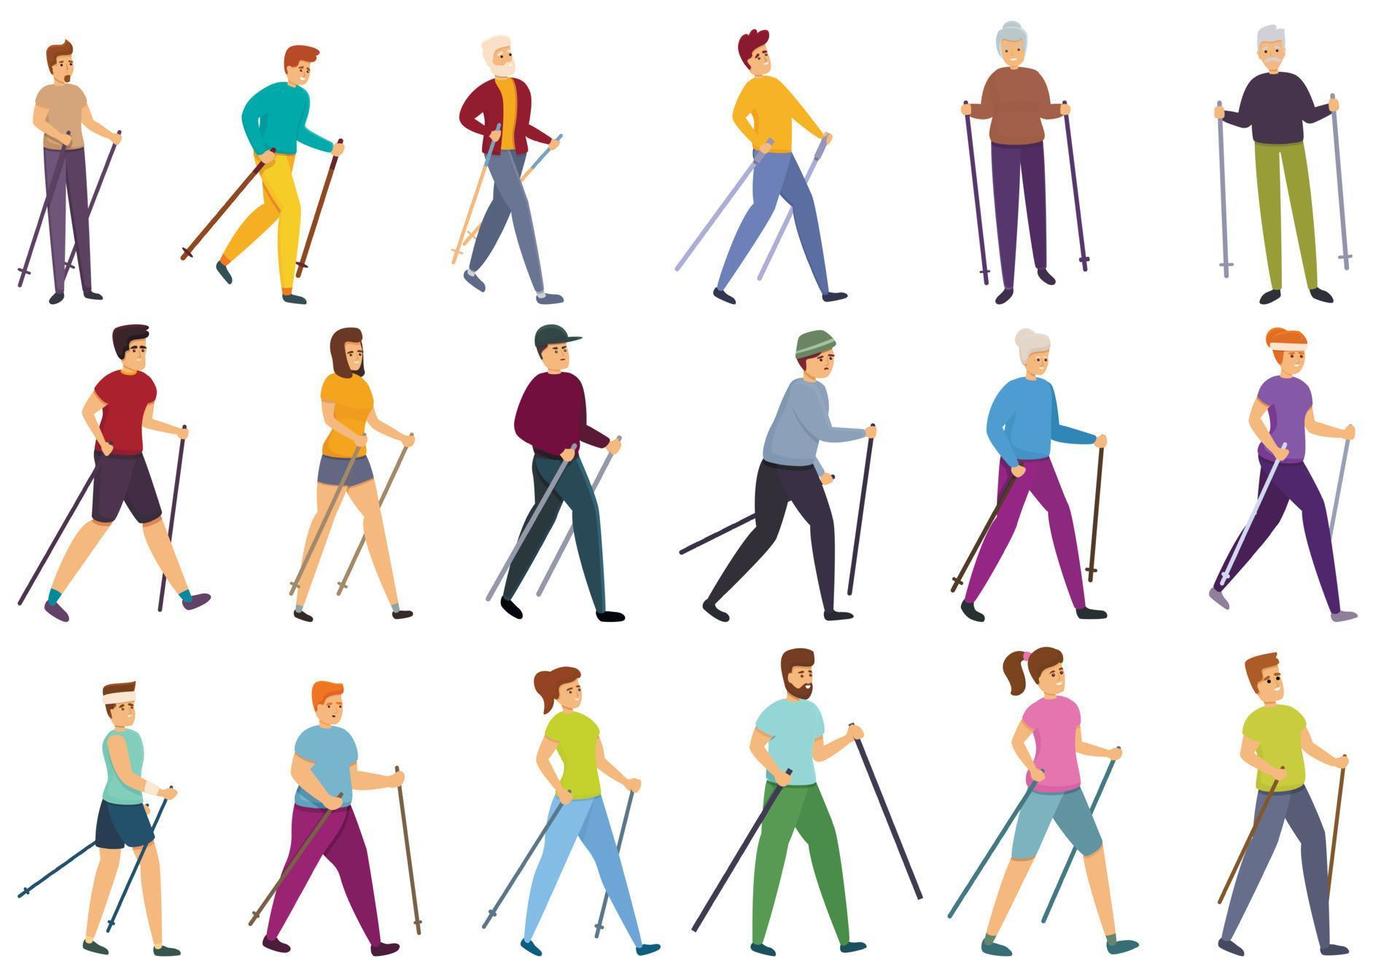 Nordic walking icons set, cartoon style vector